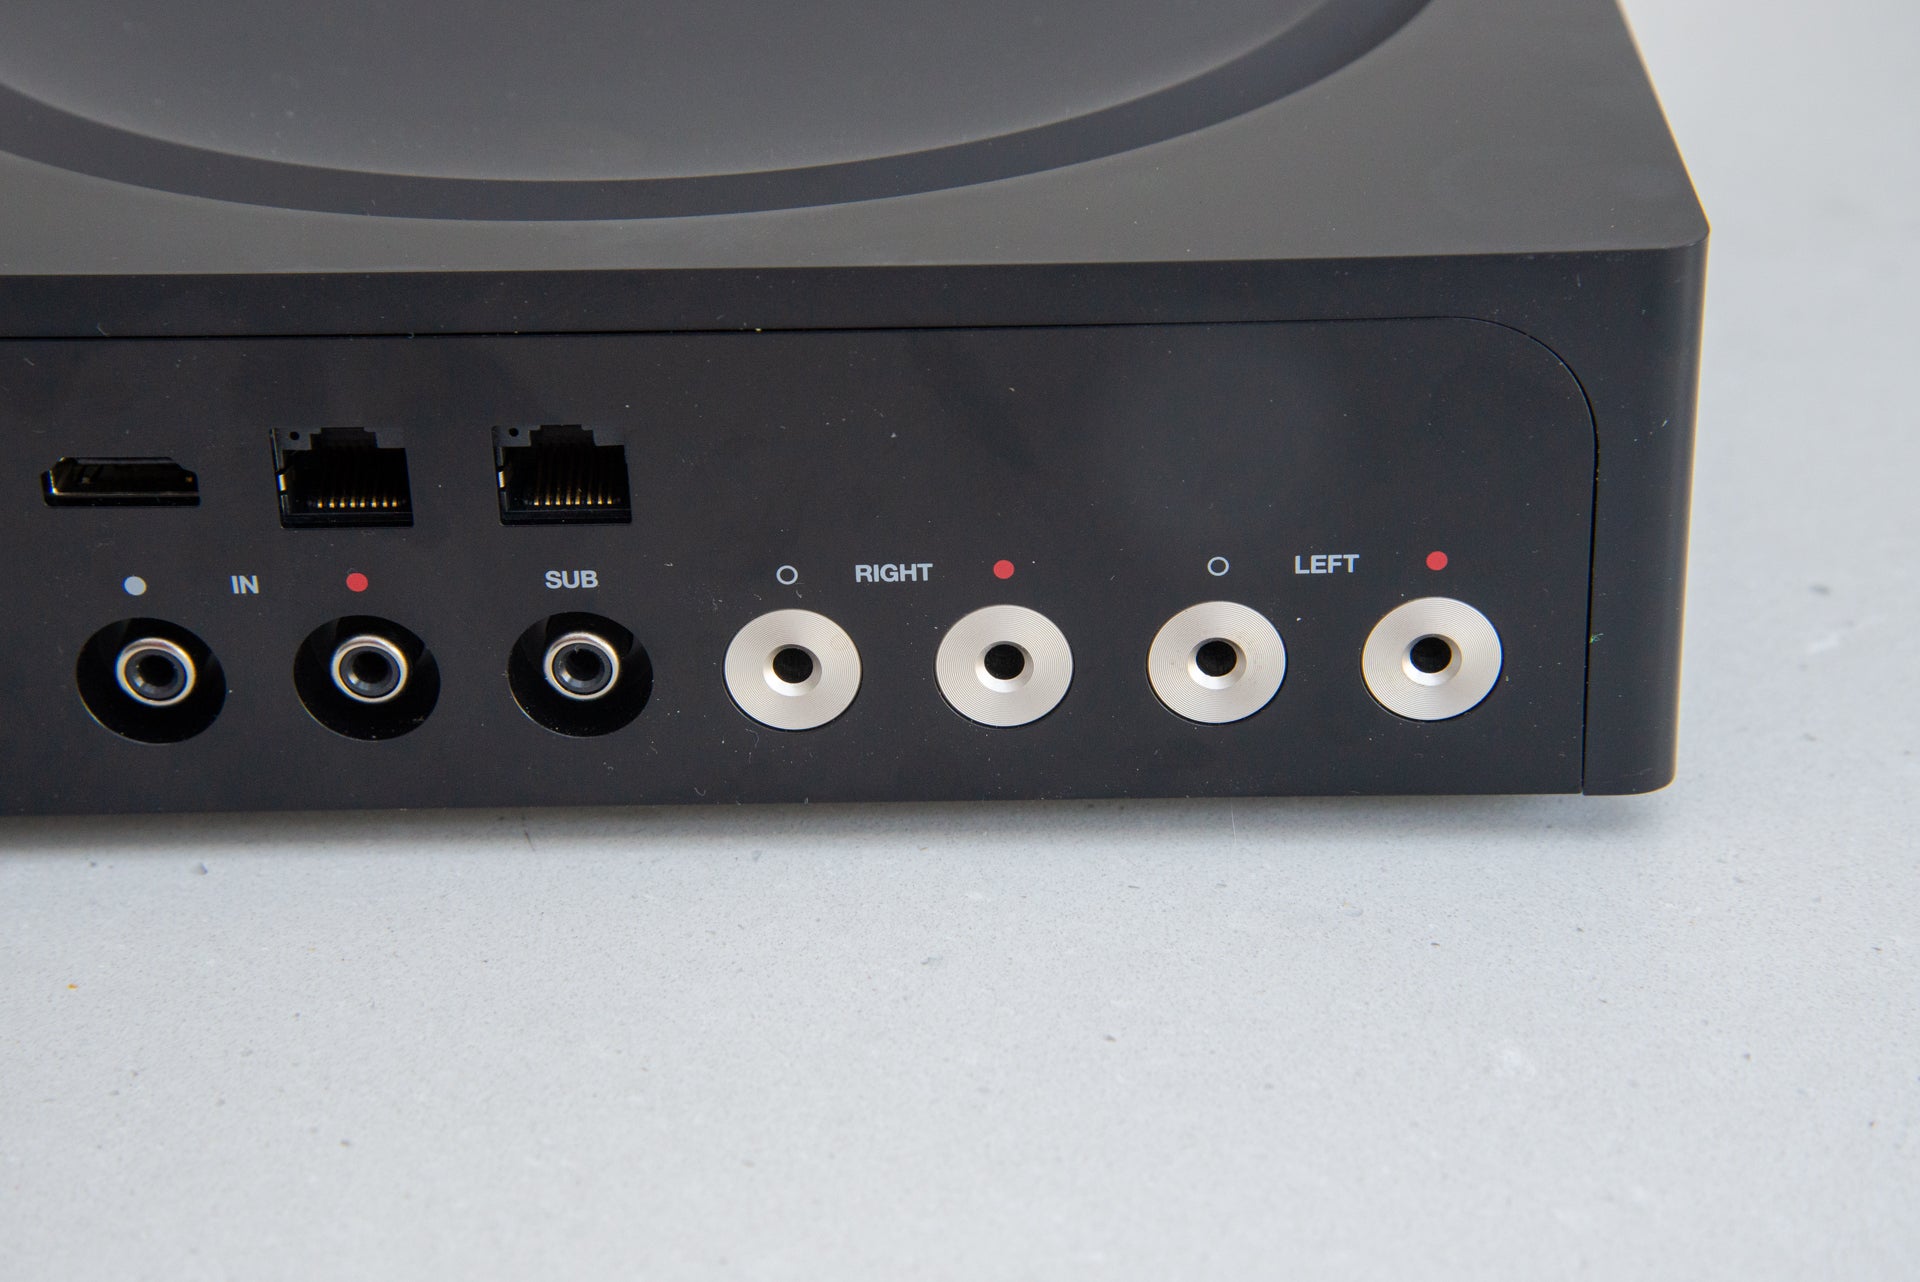 kurve vaskepulver gnier Sonos Amp Review - The best-sounding Sonos speaker